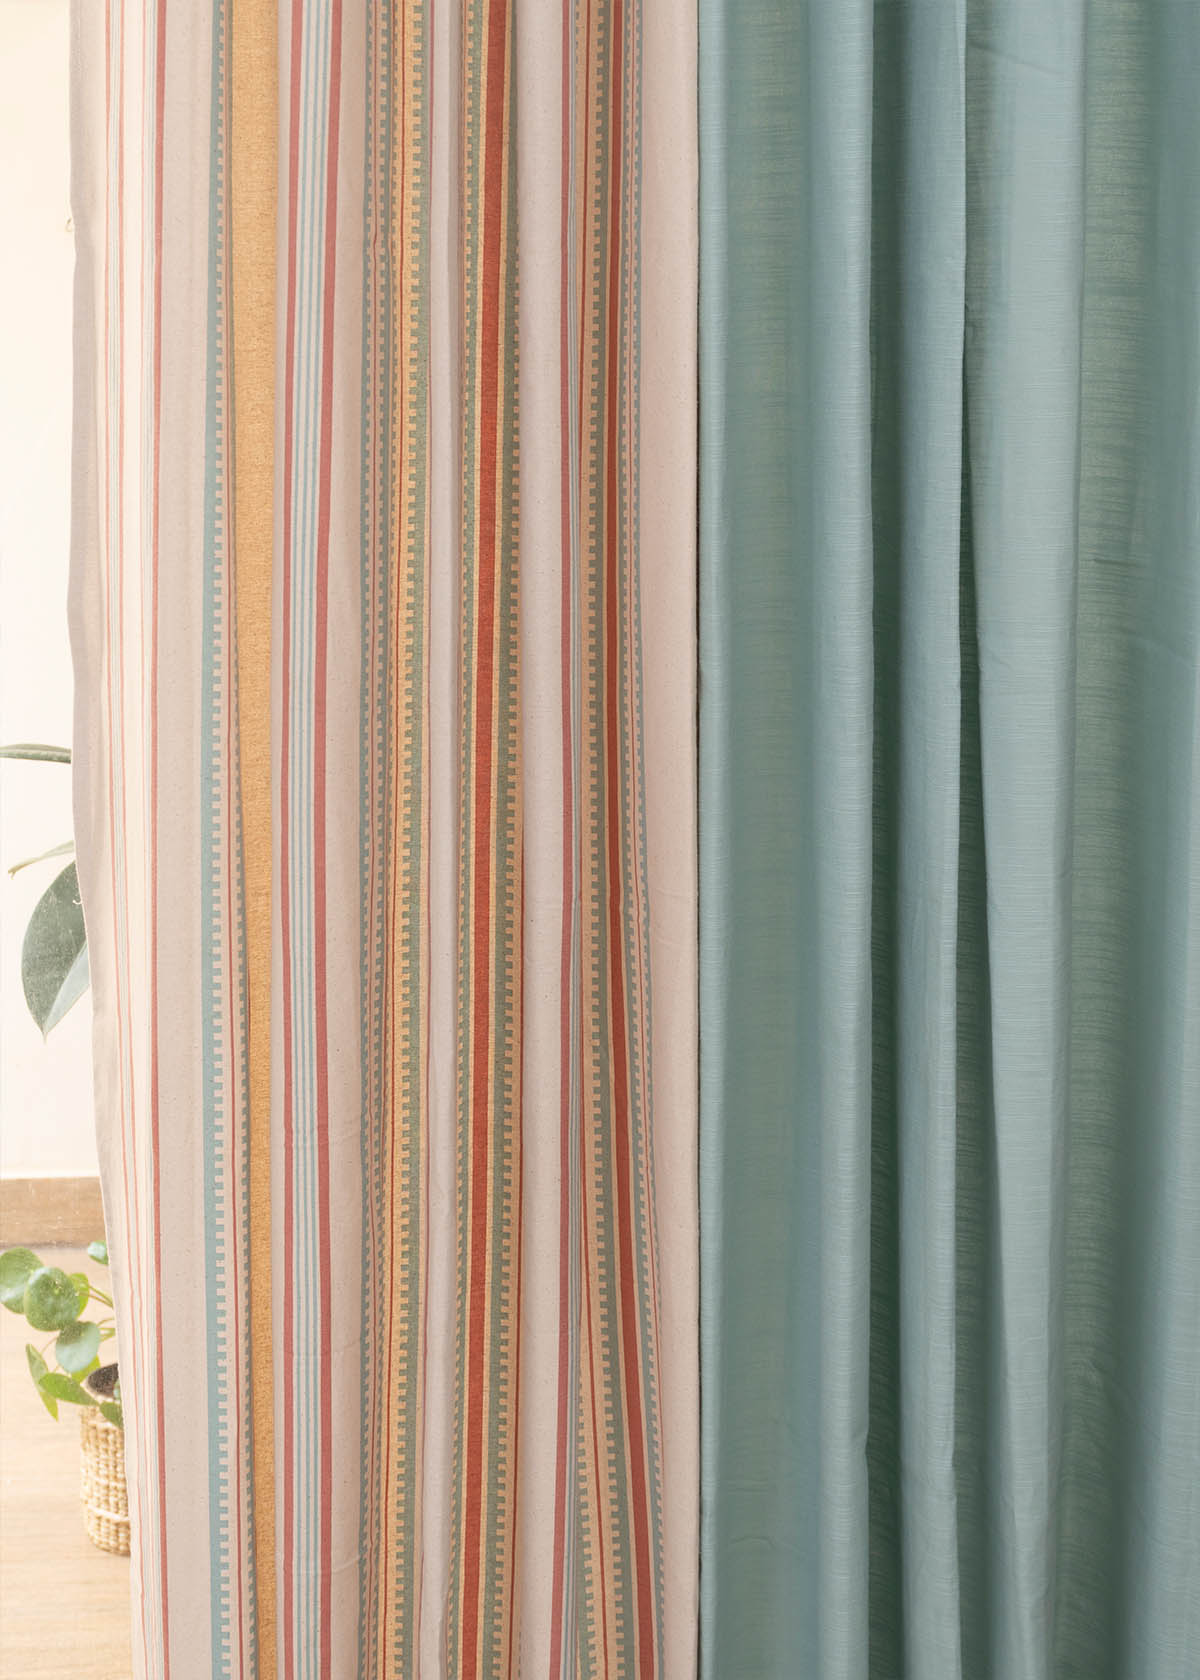 Nile Blue Solid, Roman Stripe Set Of 4 Combo Cotton Curtain - Rust And Nile Blue